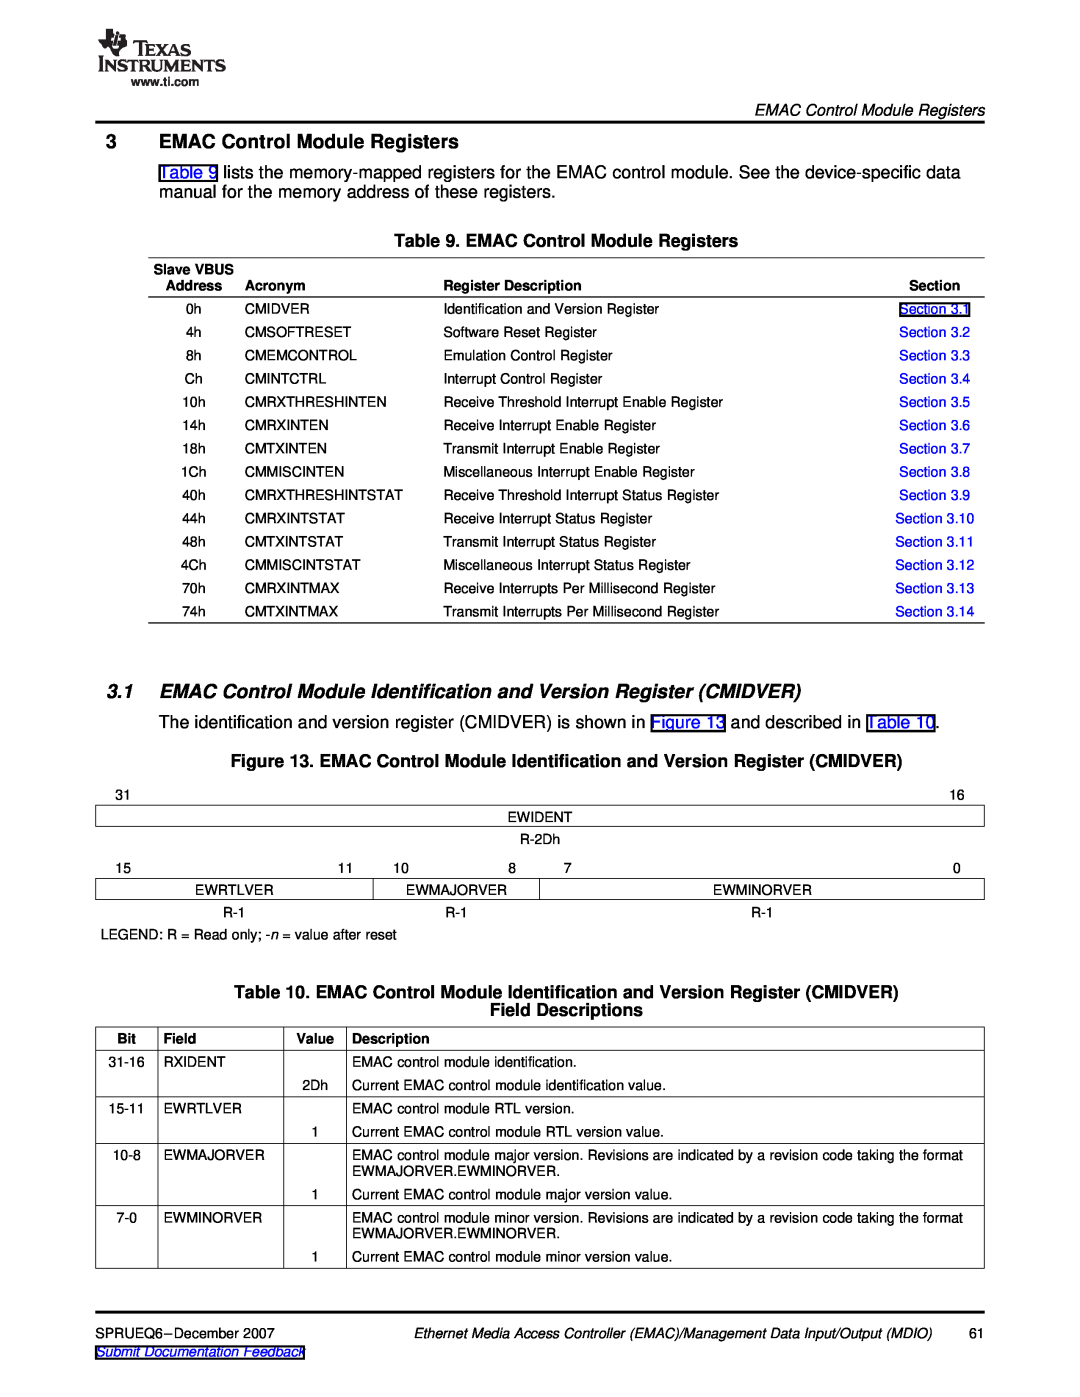 Texas Instruments TMS320DM646x manual EMAC Control Module Registers, Field Descriptions 